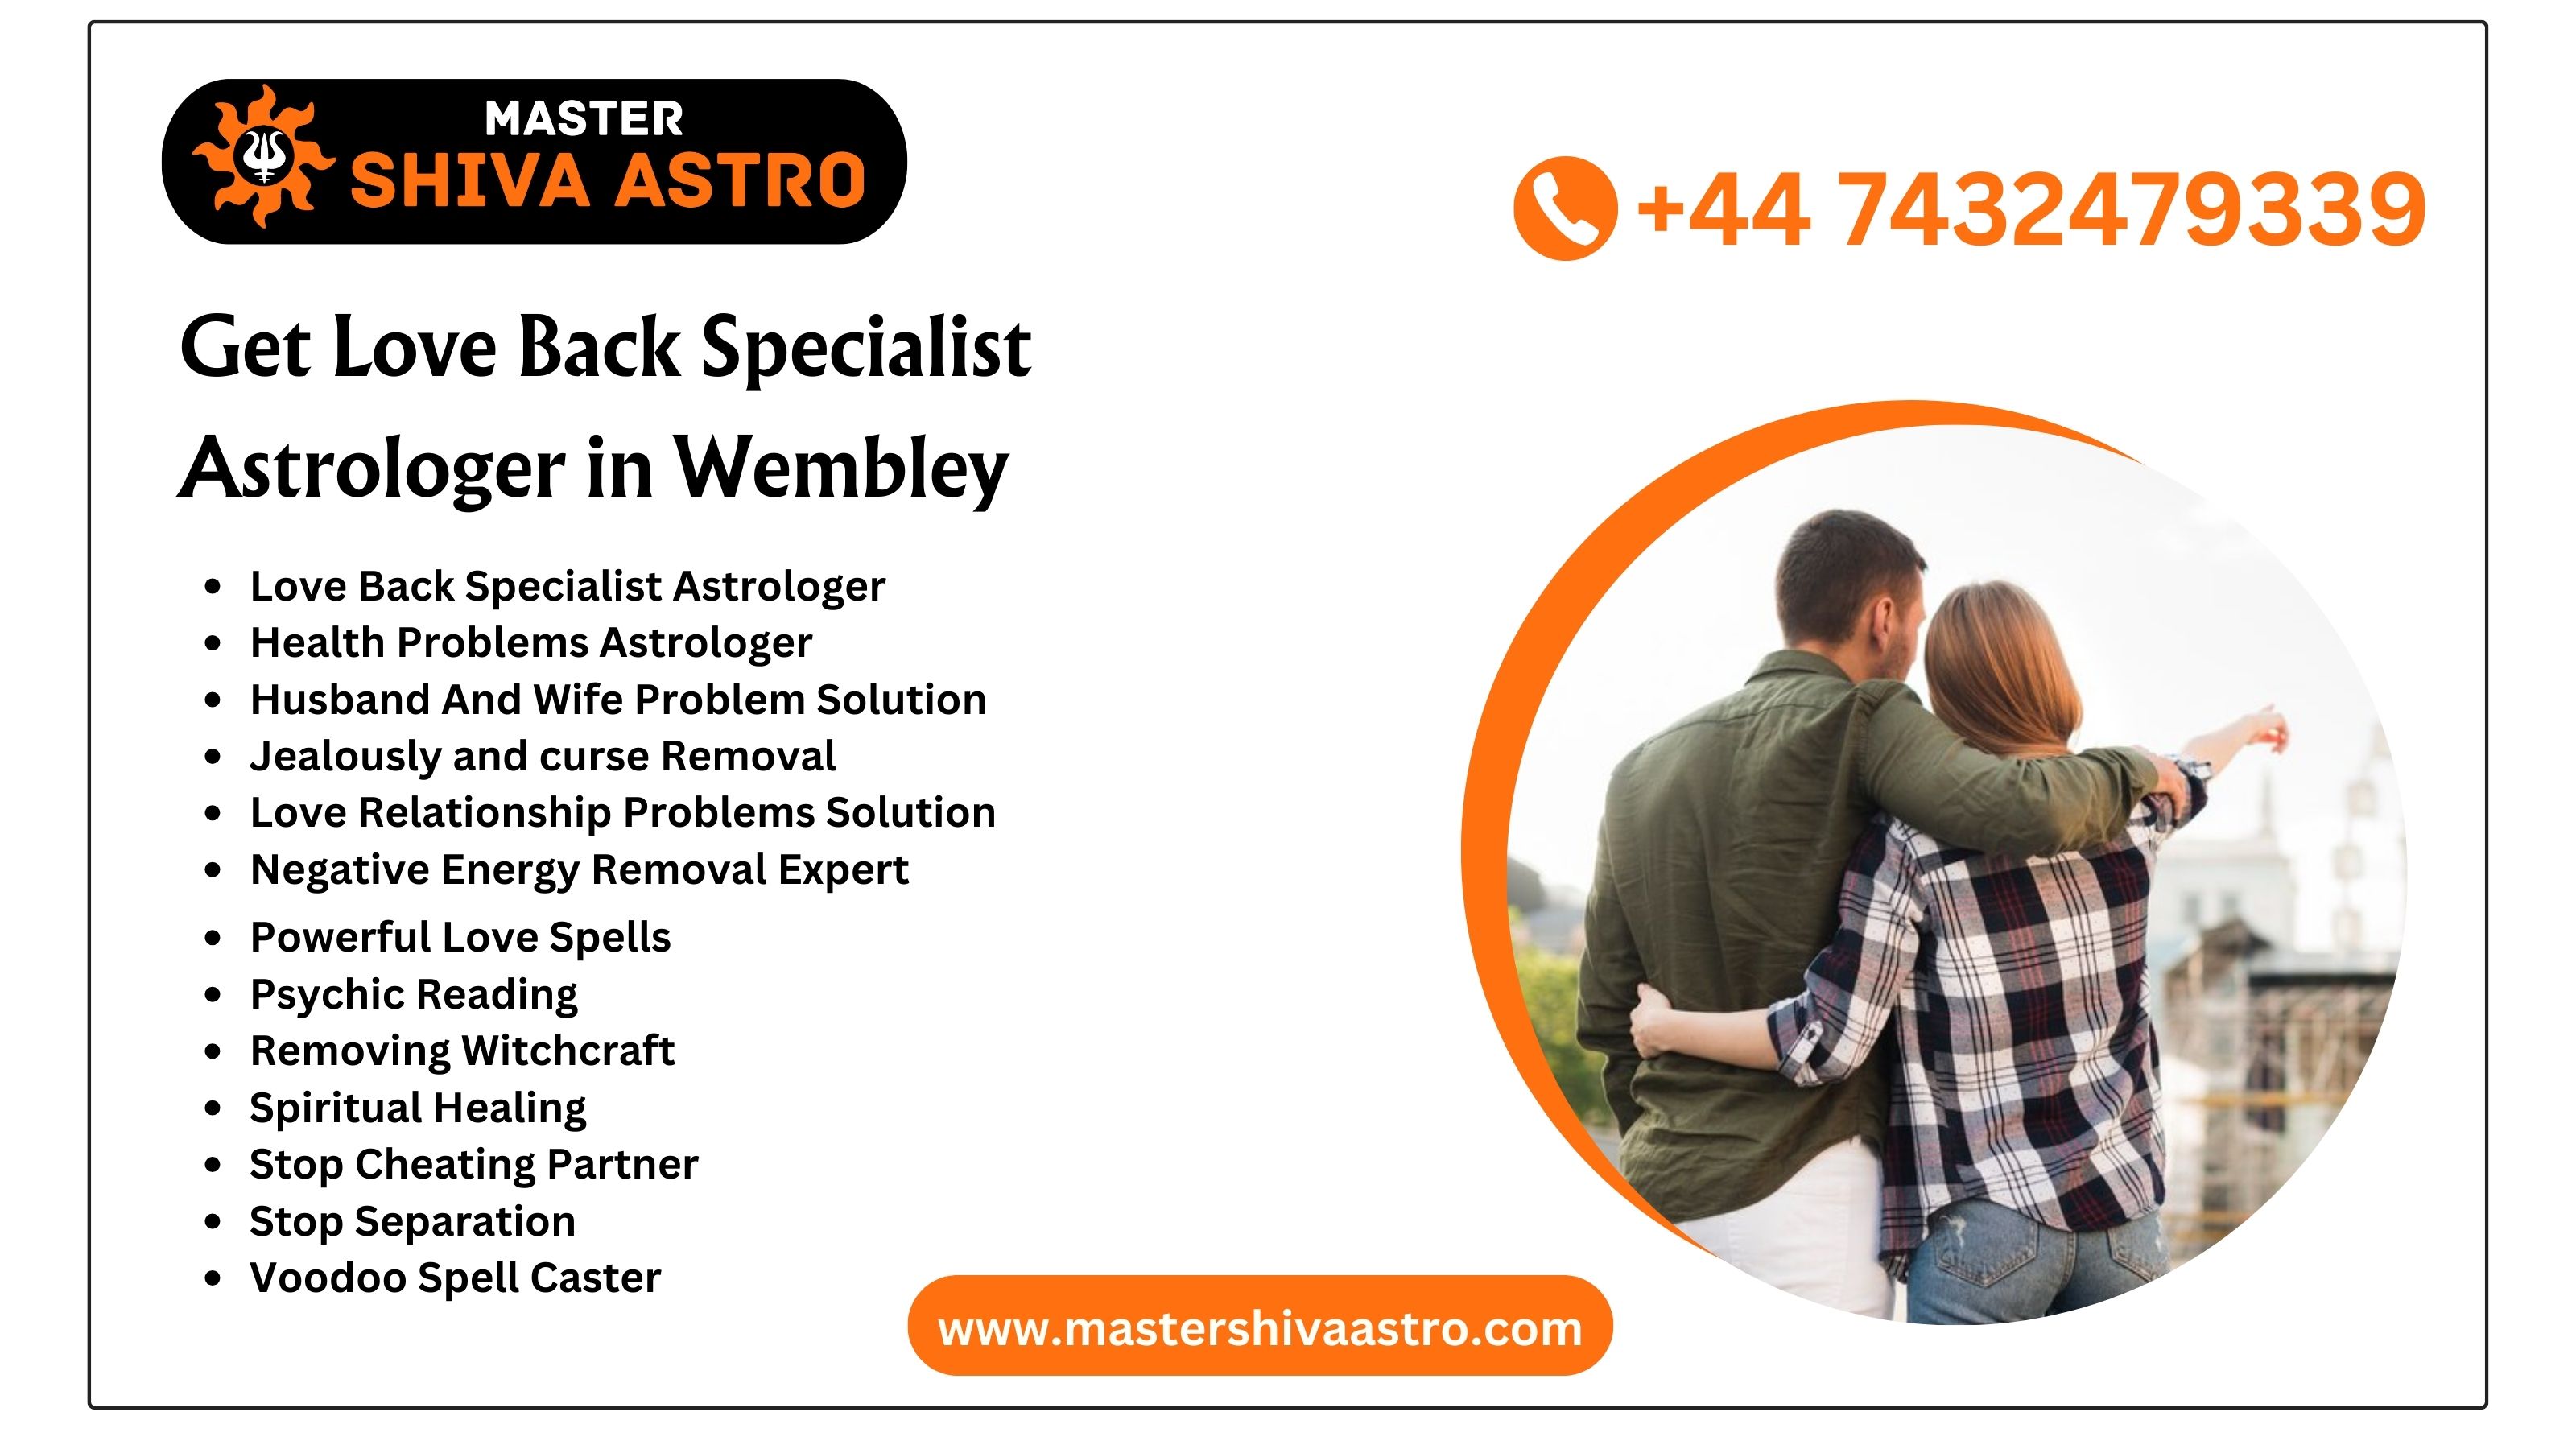 Get Love Back Specialist Astrologer in Wembley - Master Shiva